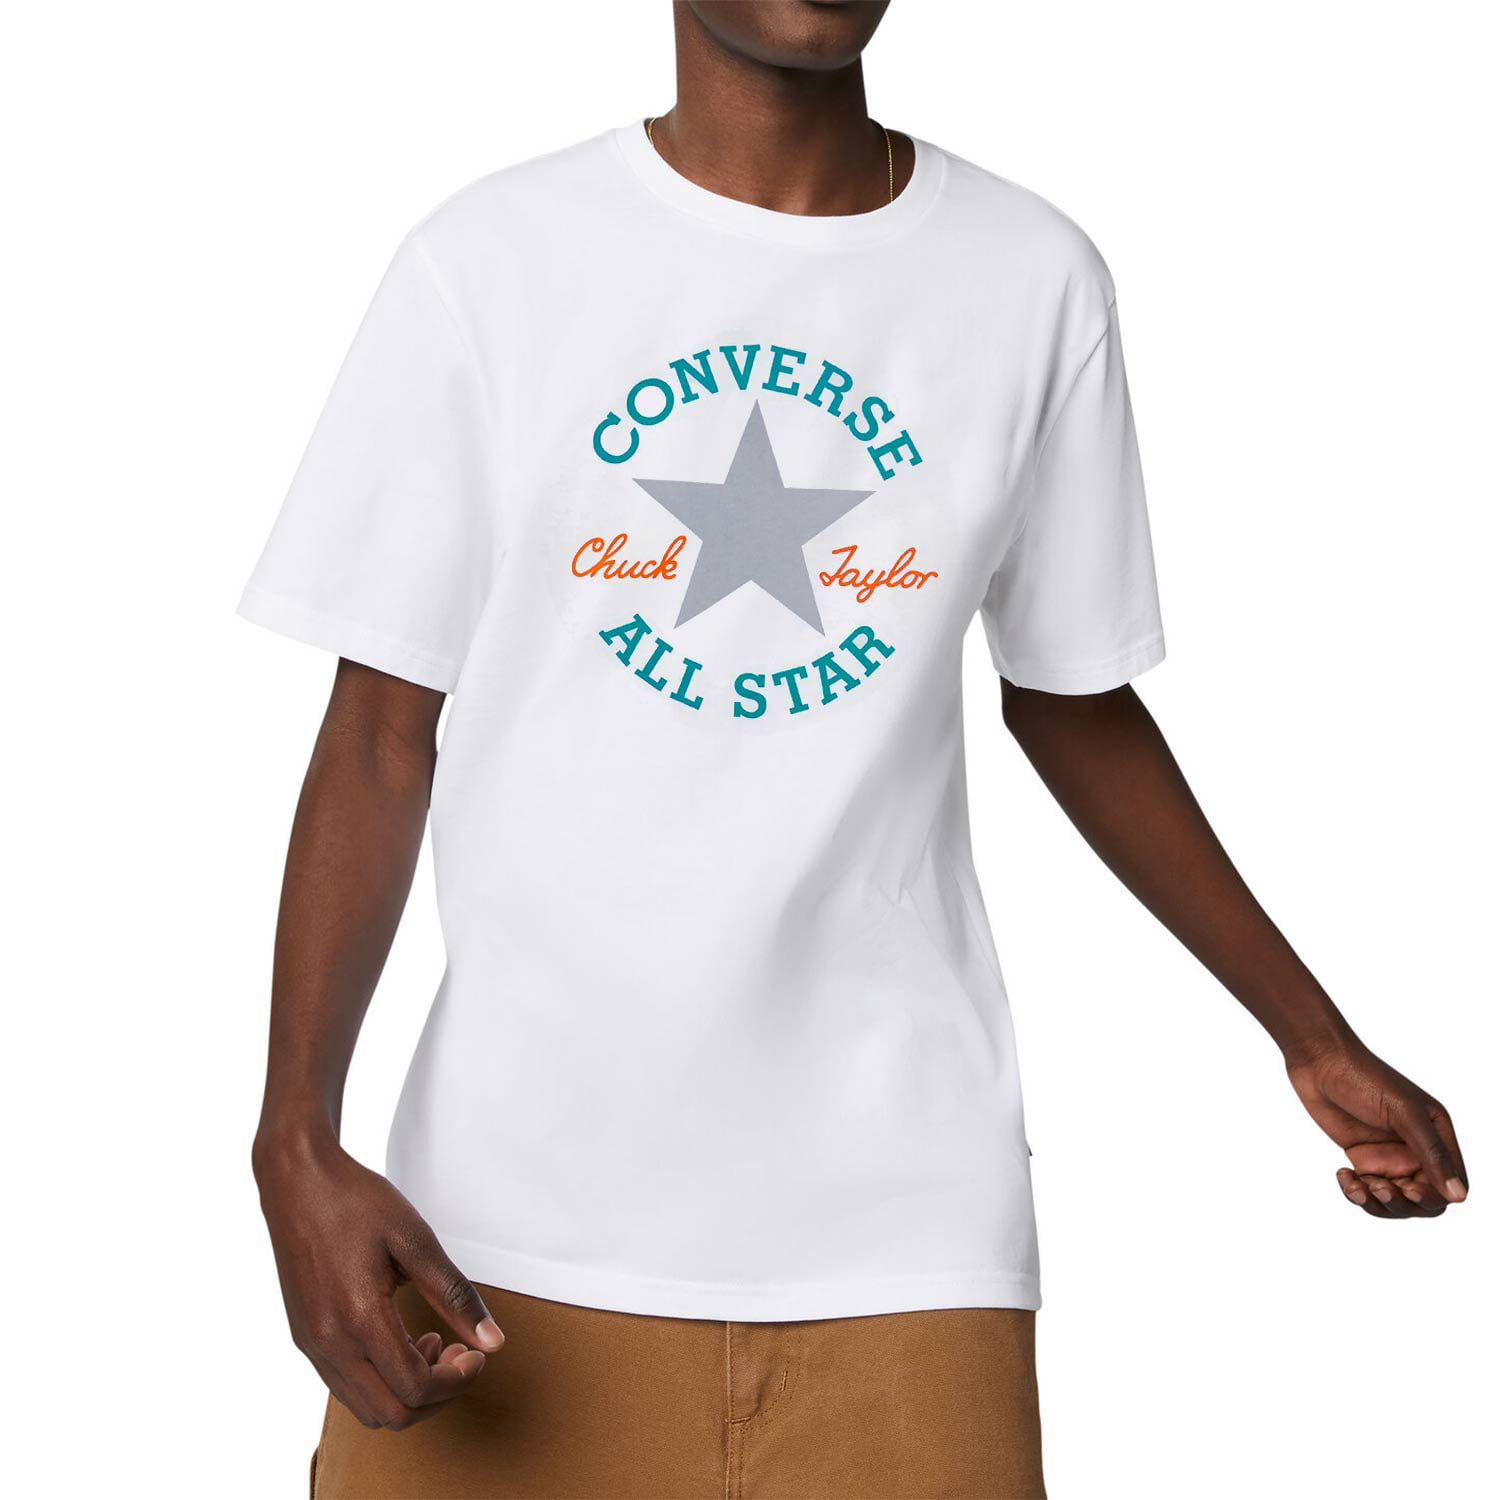 Converse Deconstructed Chuck Taylor T-Shirt White 10020526-a02-102